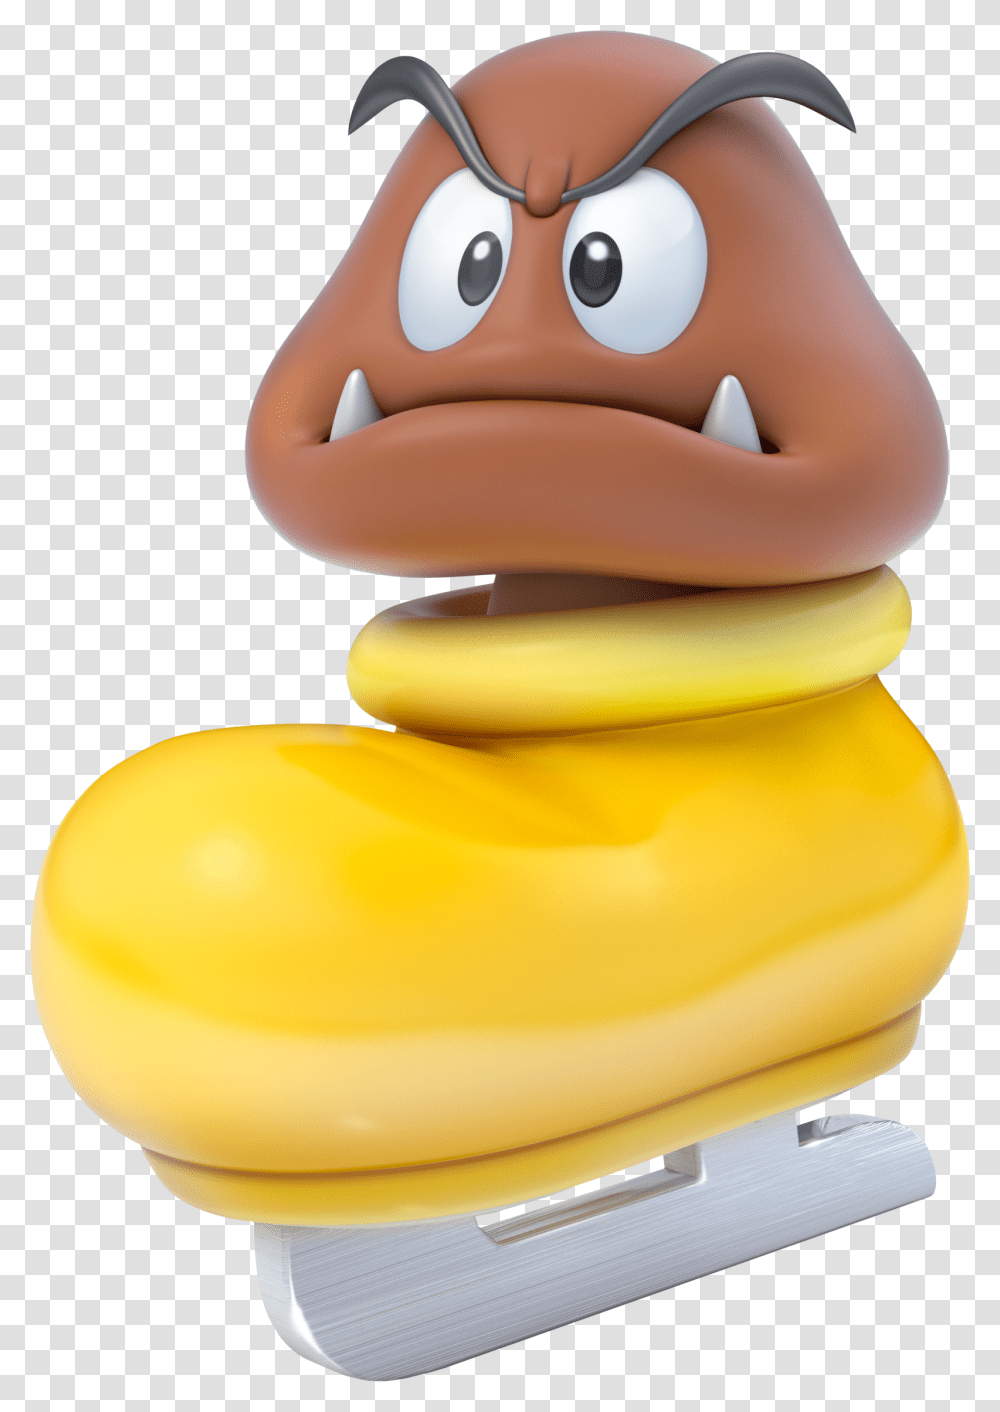 Goomba Shoe Artwork Goombas Mario 3d World, Figurine, Toy, Banana, Fruit Transparent Png